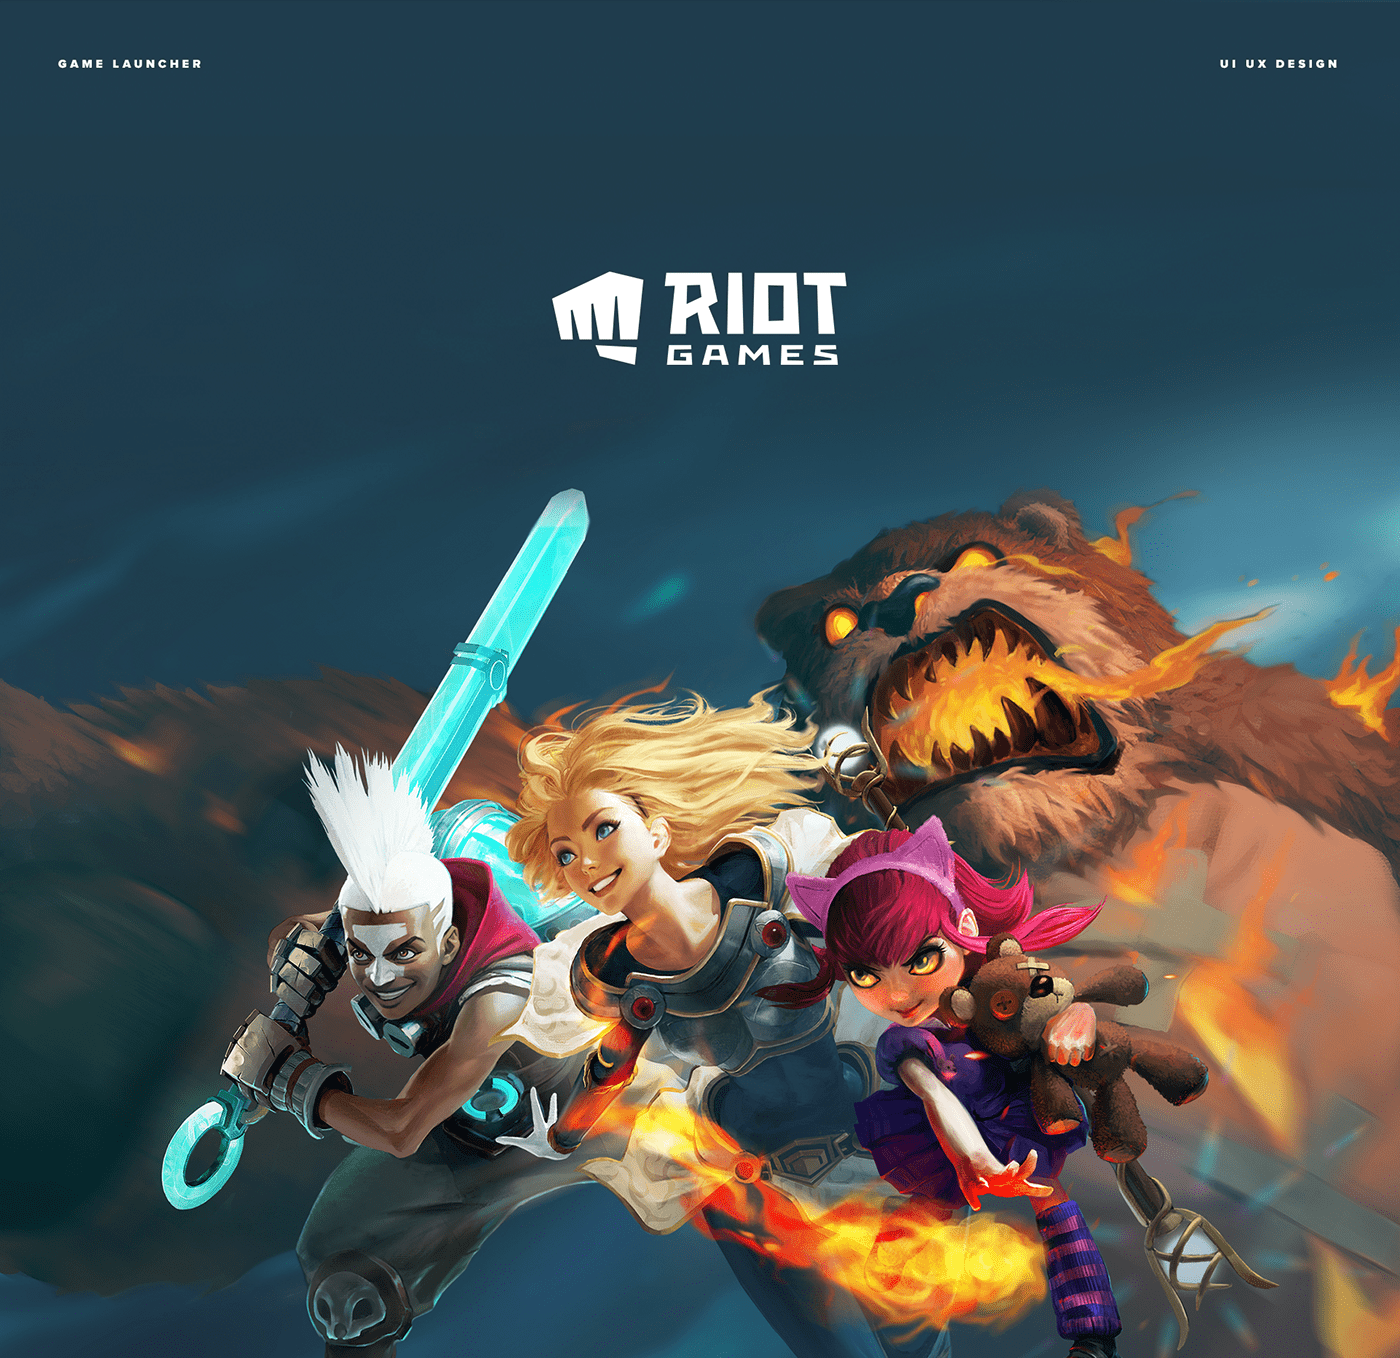 Riot Games, Game Launcher, UI/UX Design